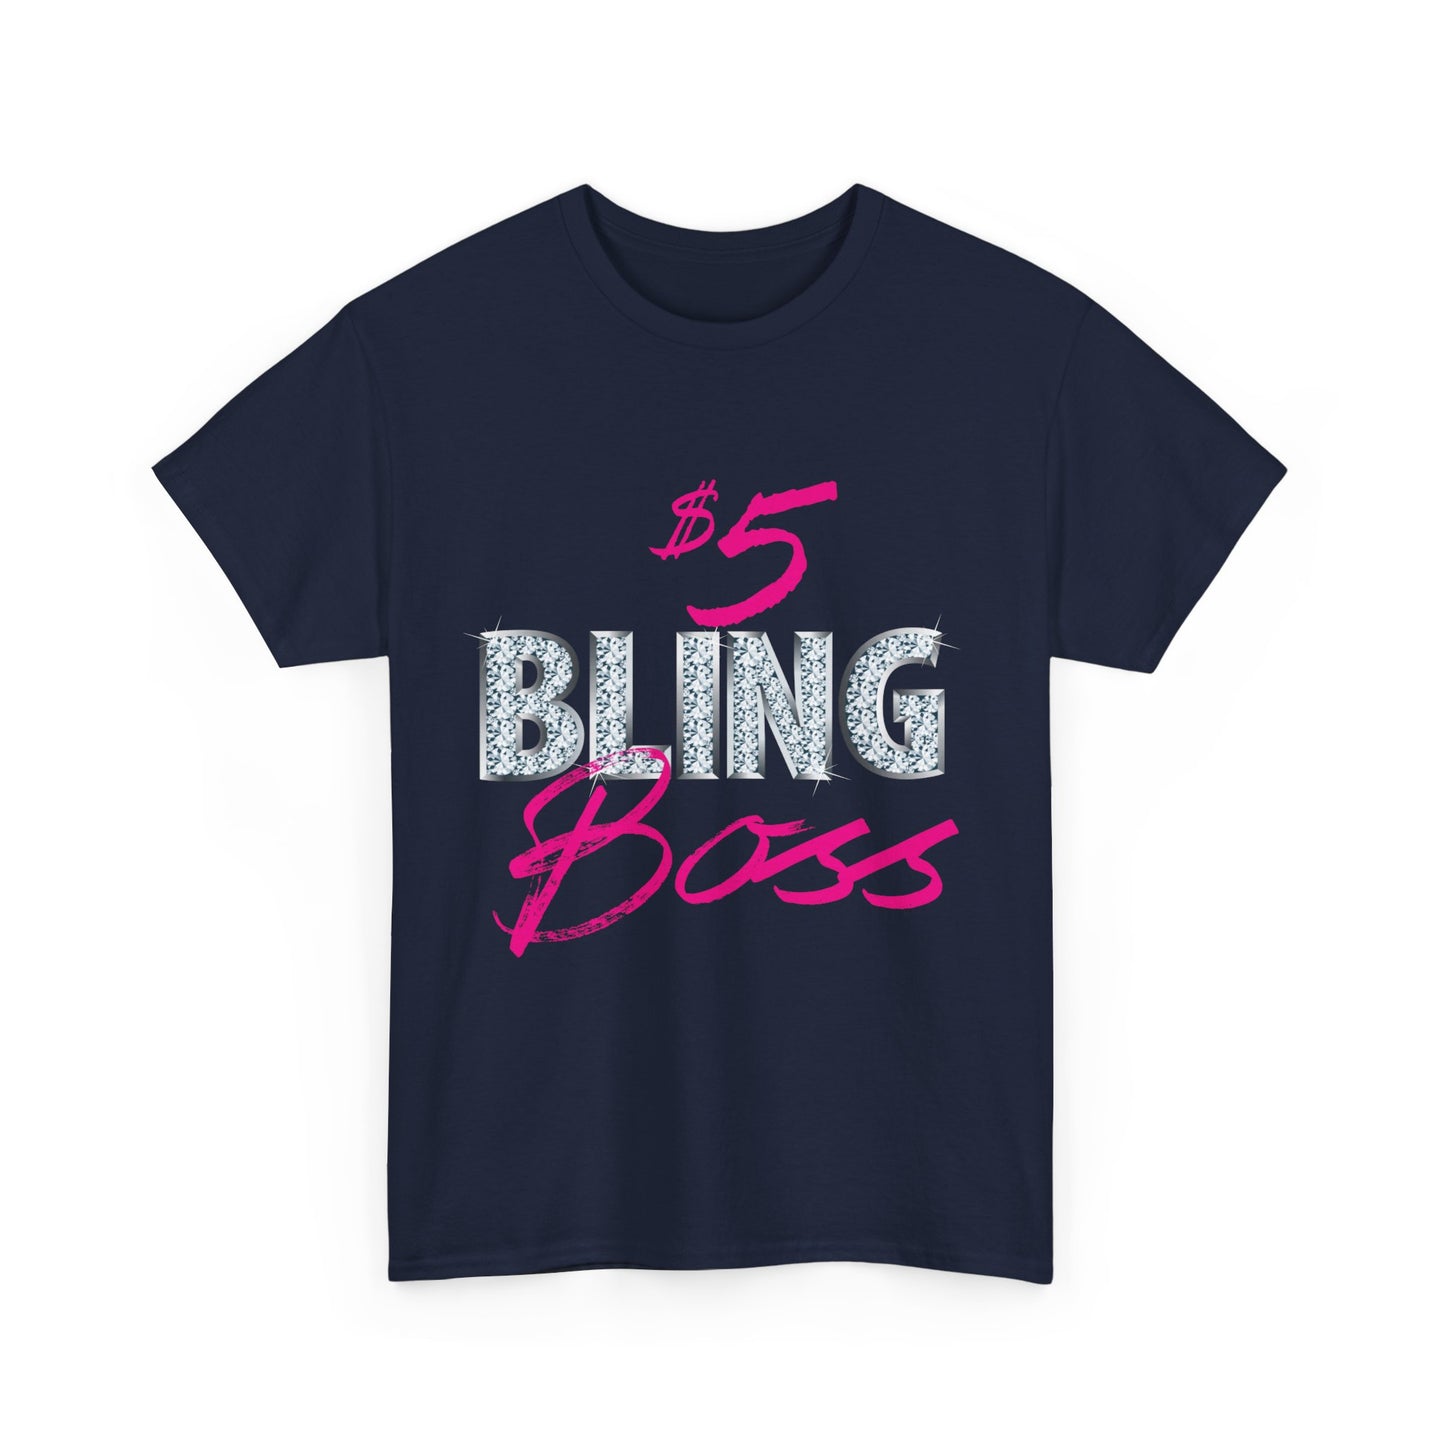 $5 Bling Boss T-shirt - Regular